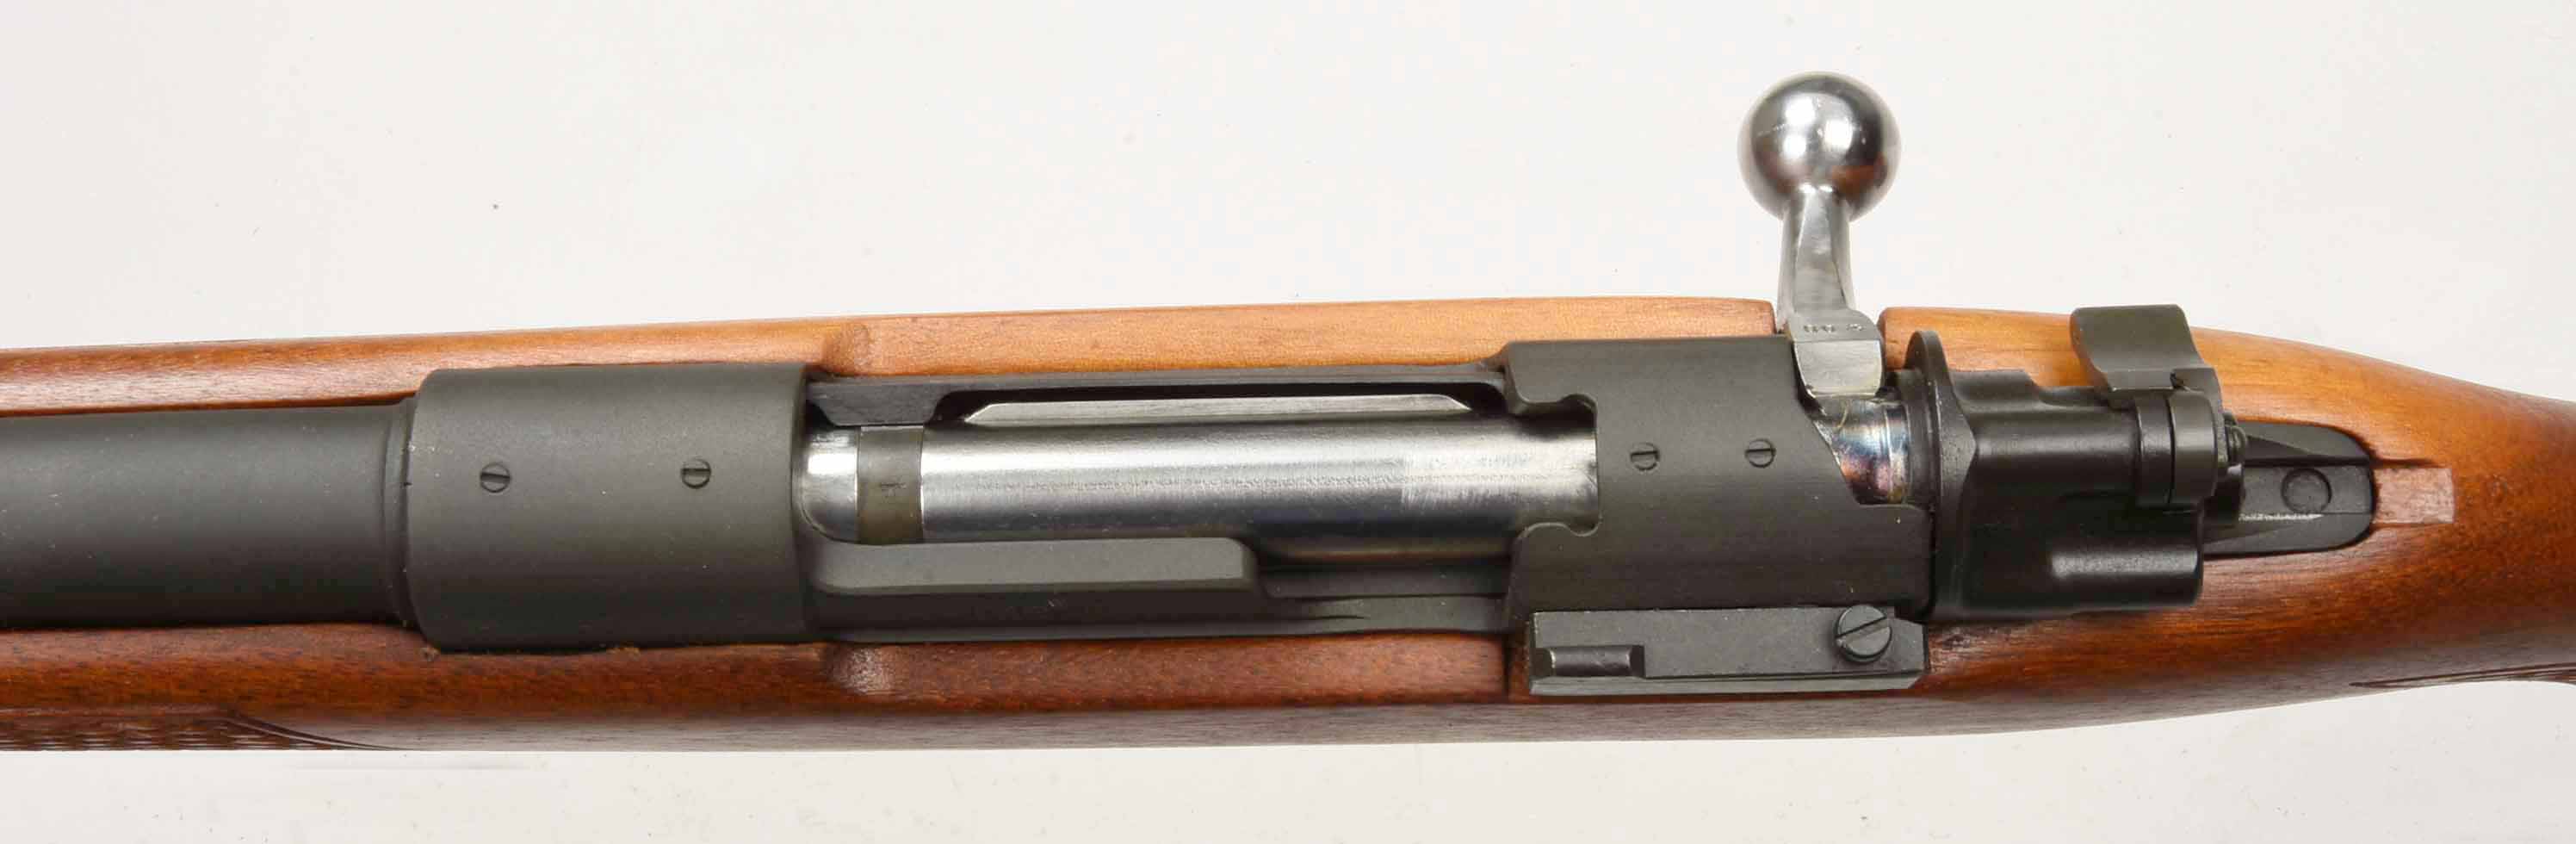 ./guns/rifle/bilder/Rifle-Kongsberg-M83-3003-5.jpg